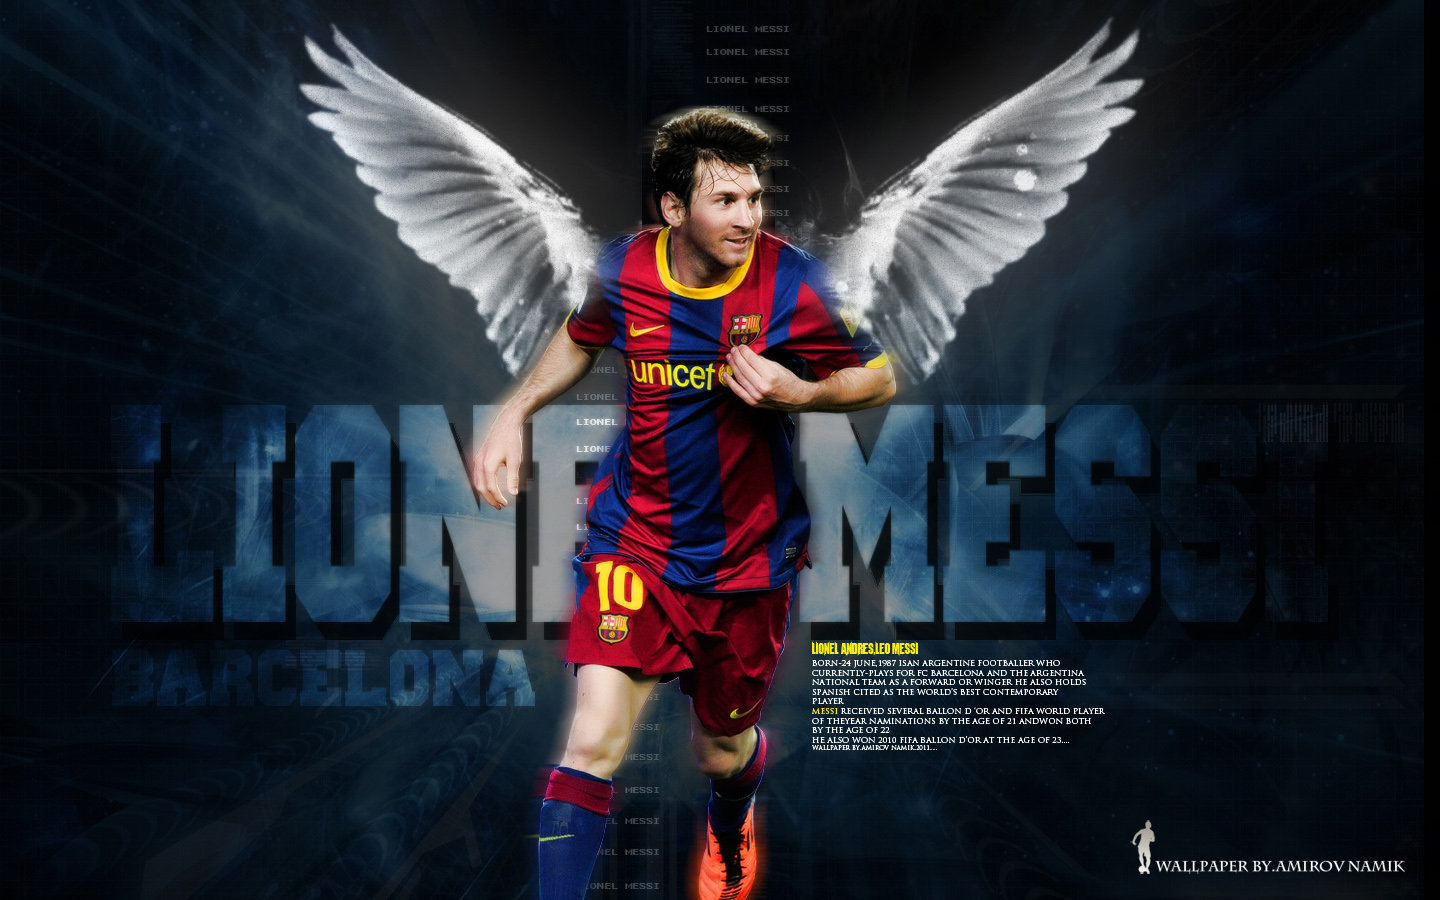 Andres Messi Image Lionel Fc Barcelona Wallpaper HD